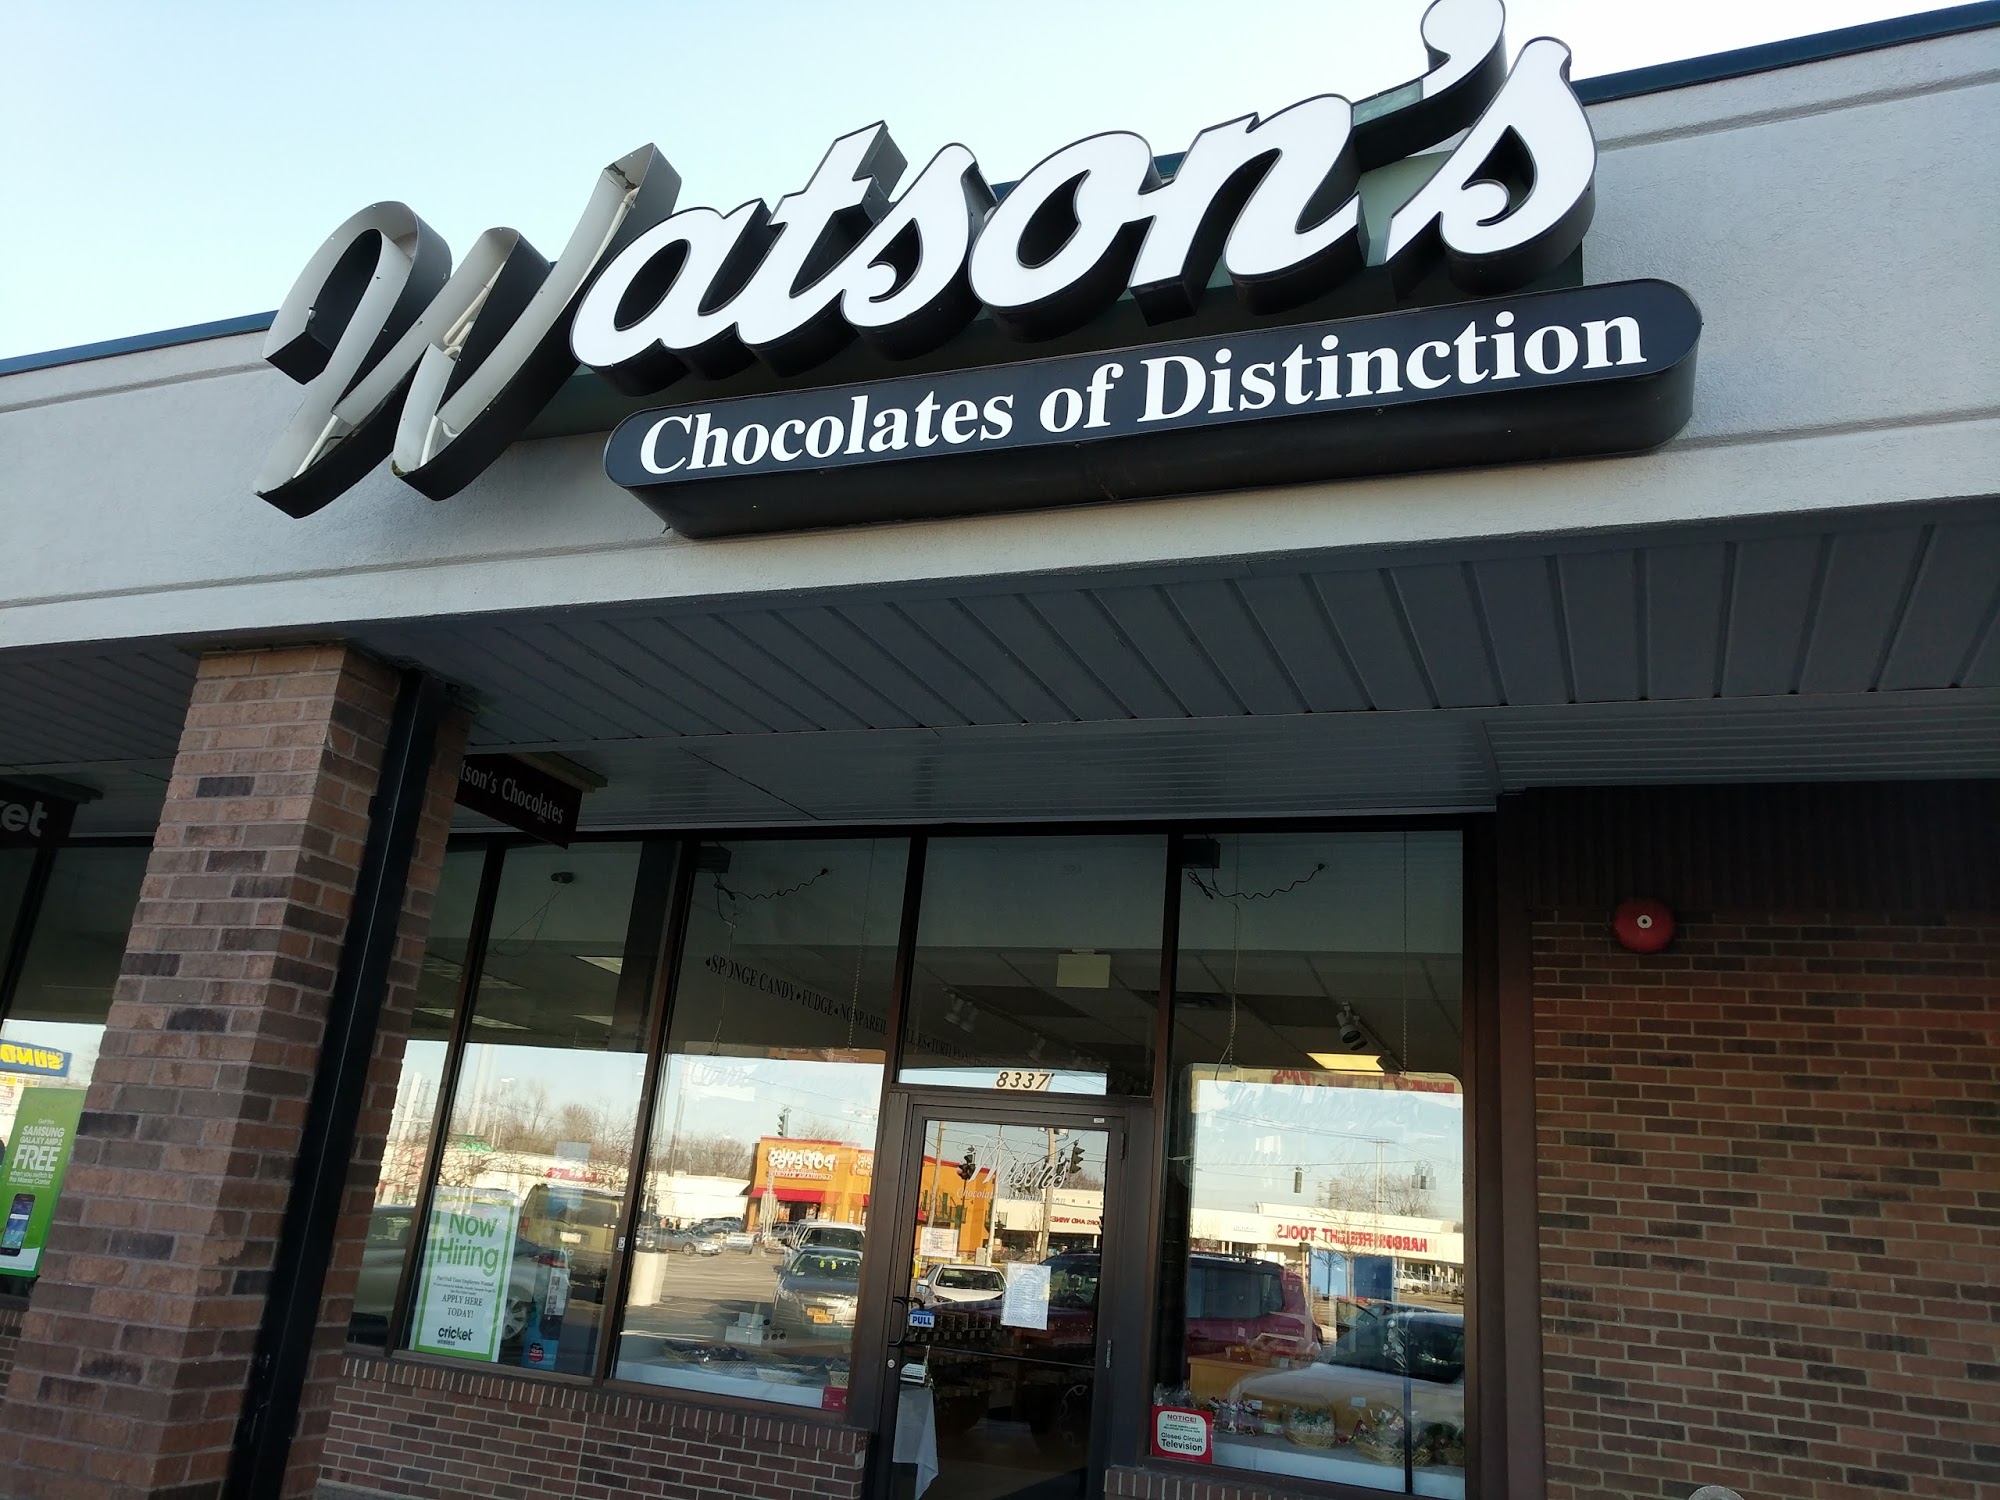 Watson's Chocolates